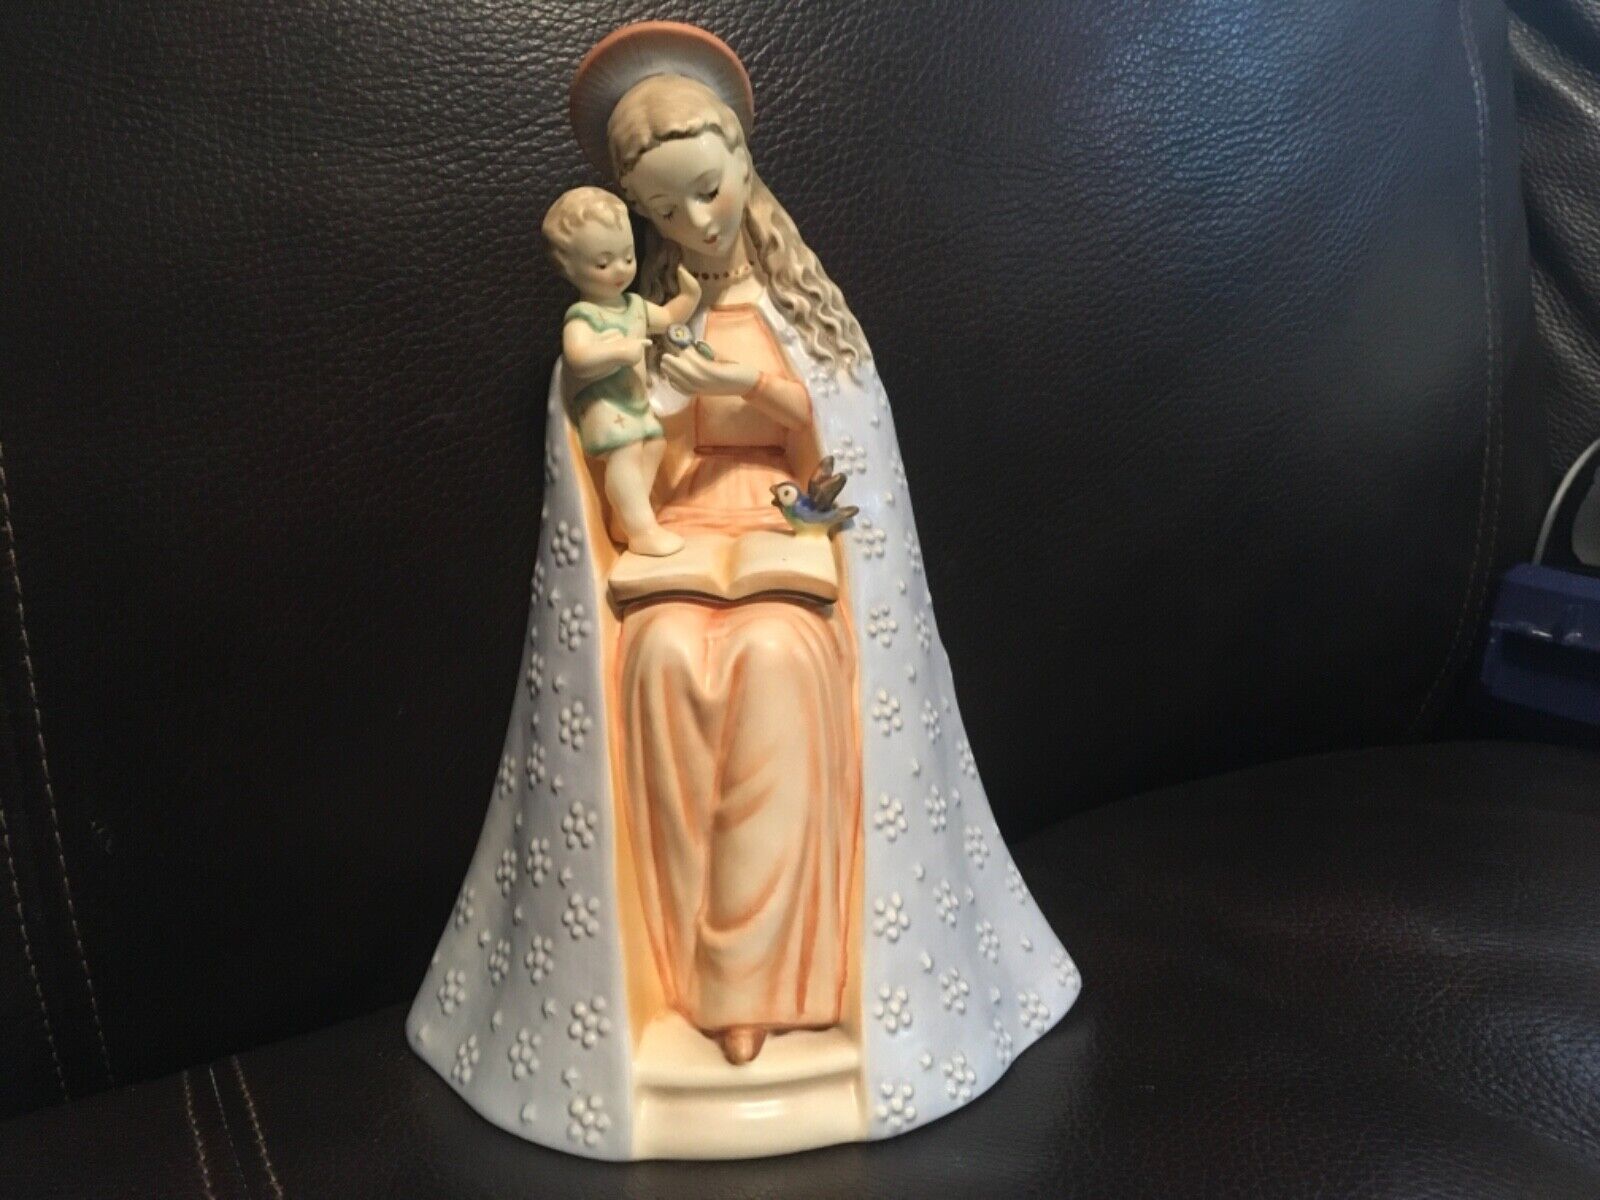 Hummel Goebel Figurines From Germany - Madonna and Baby Jesus - EUC